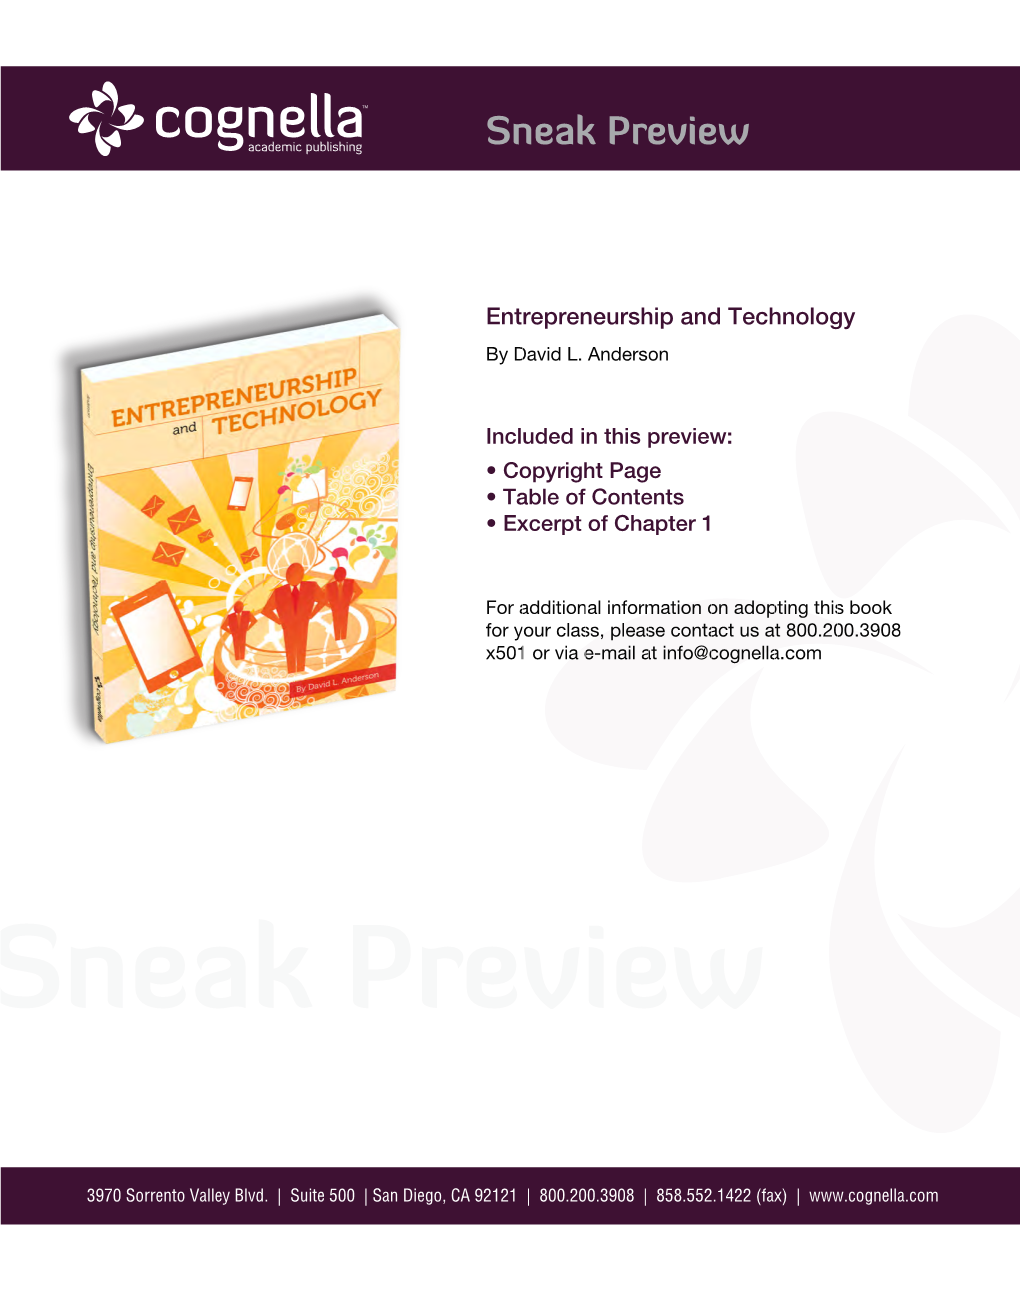 Entrepreneurship and Technology by David L